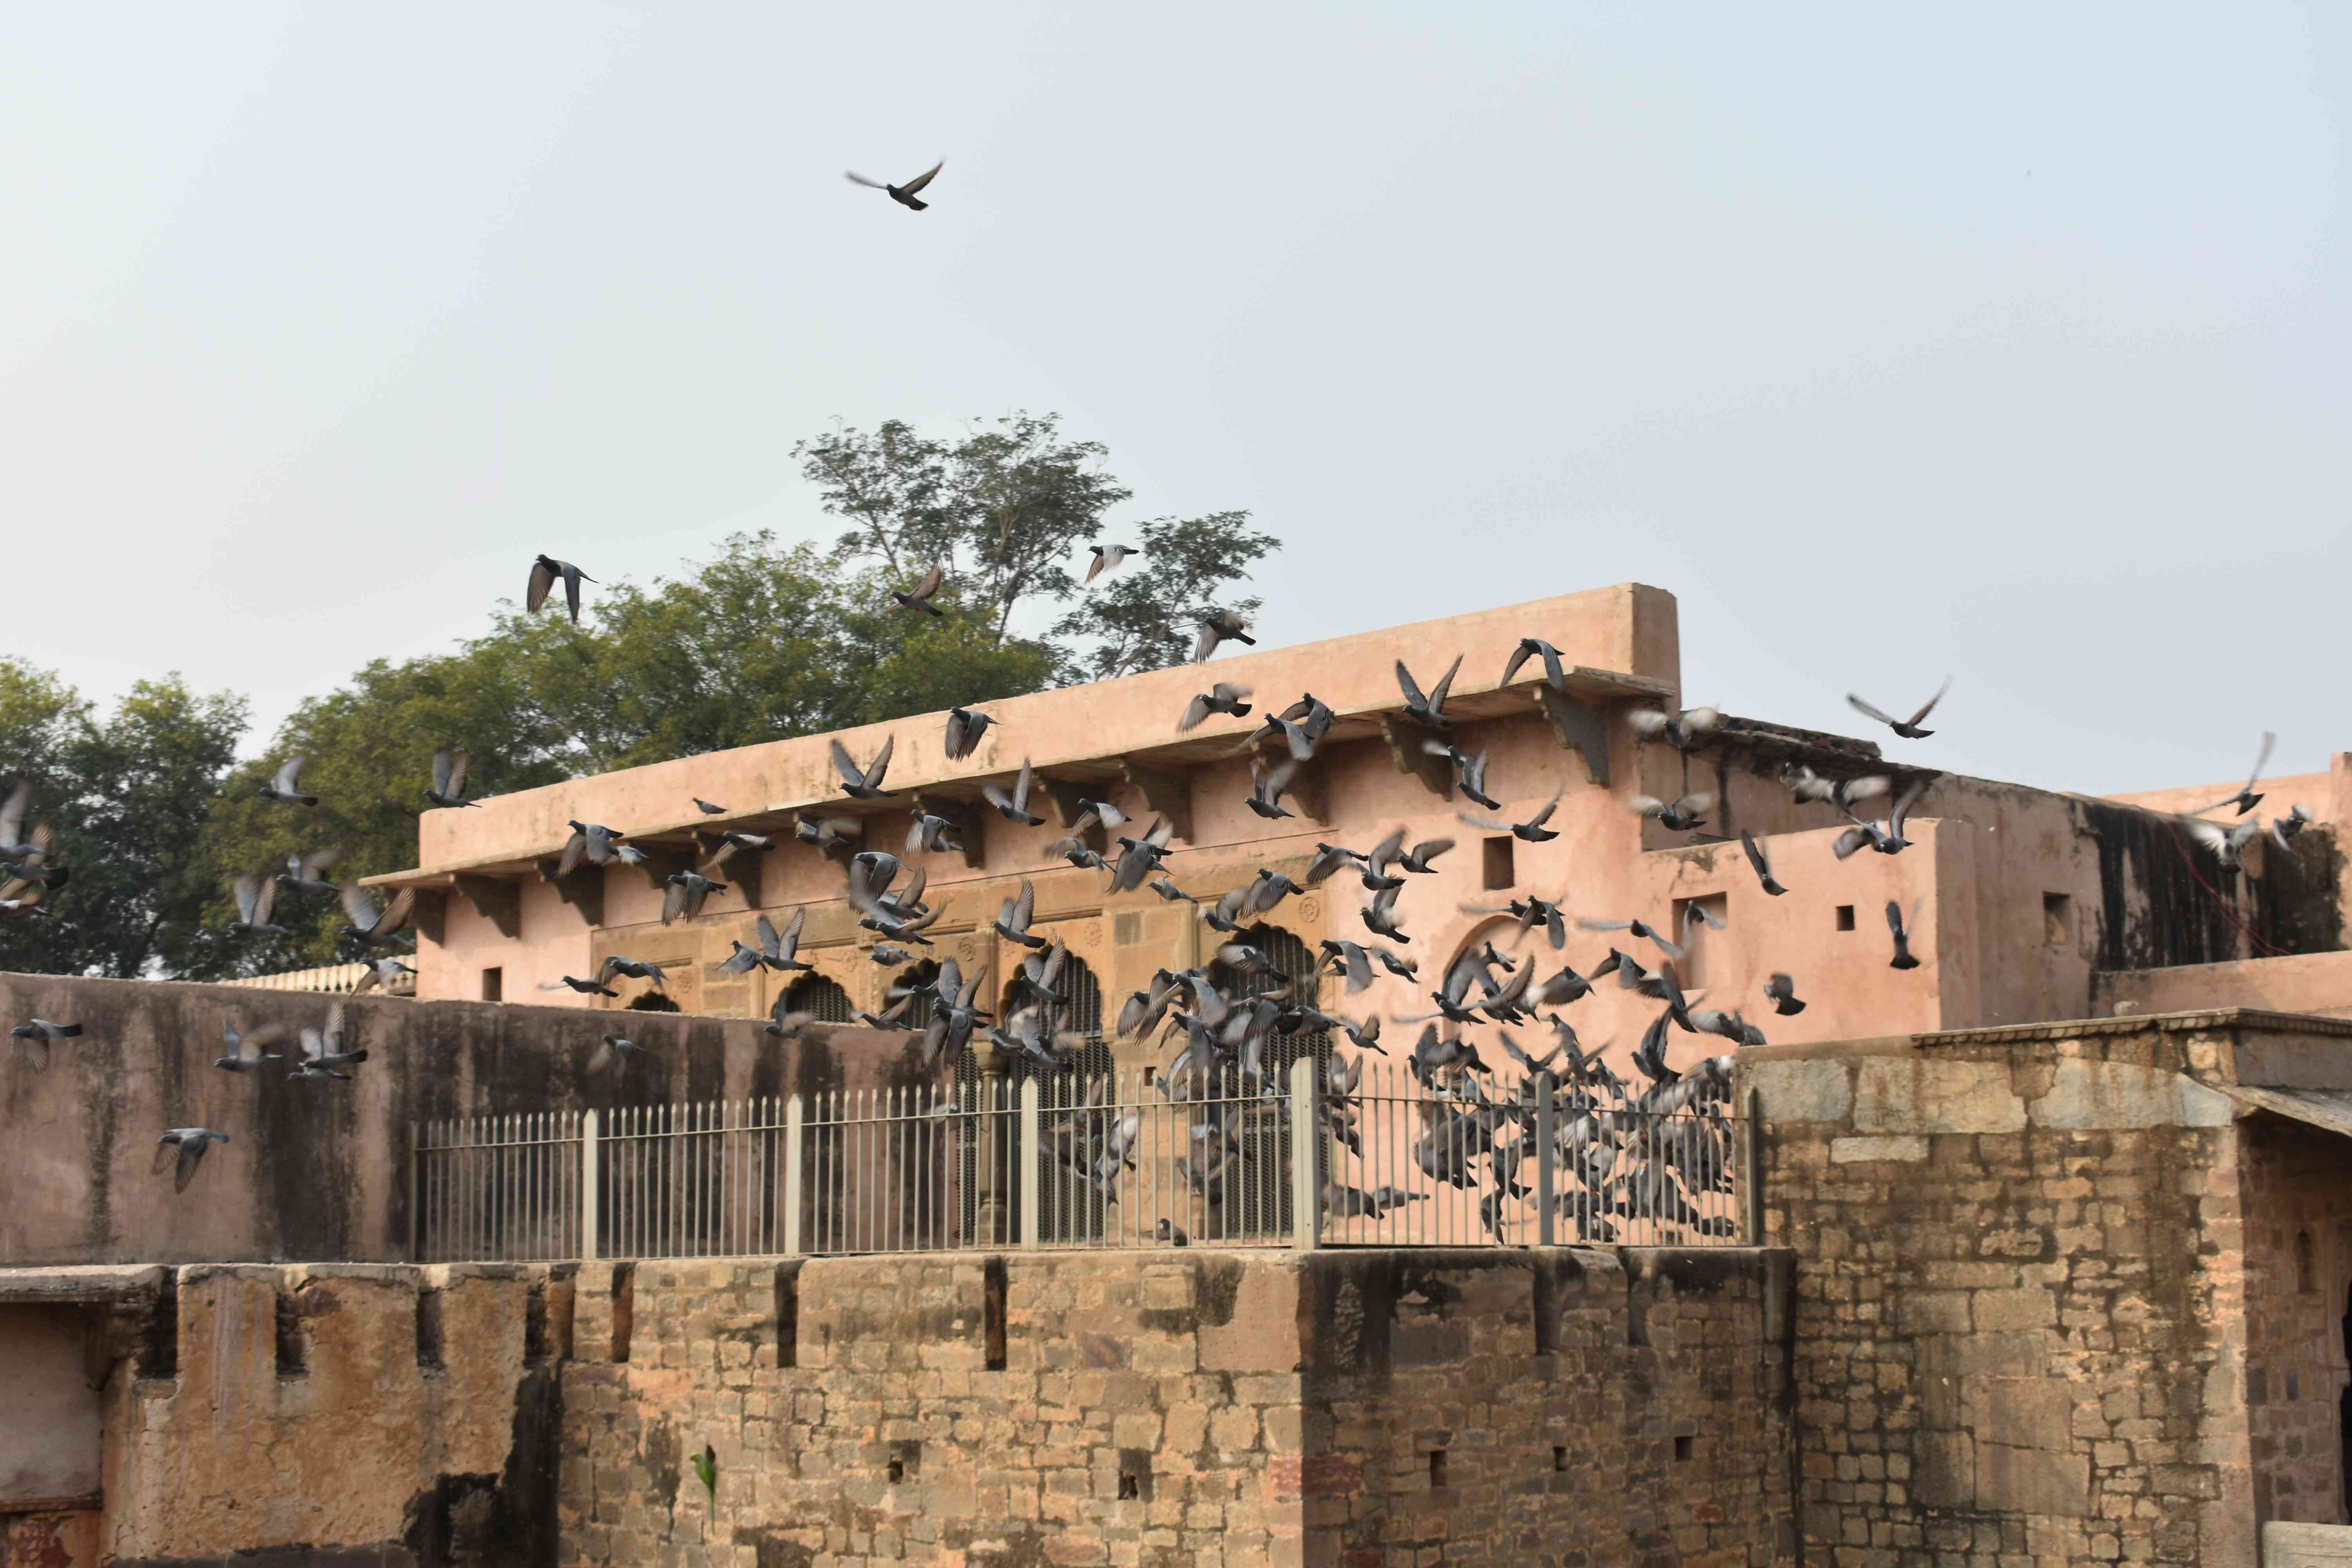 Aesthetic Blasphemy | A flock of pigeons taking flight